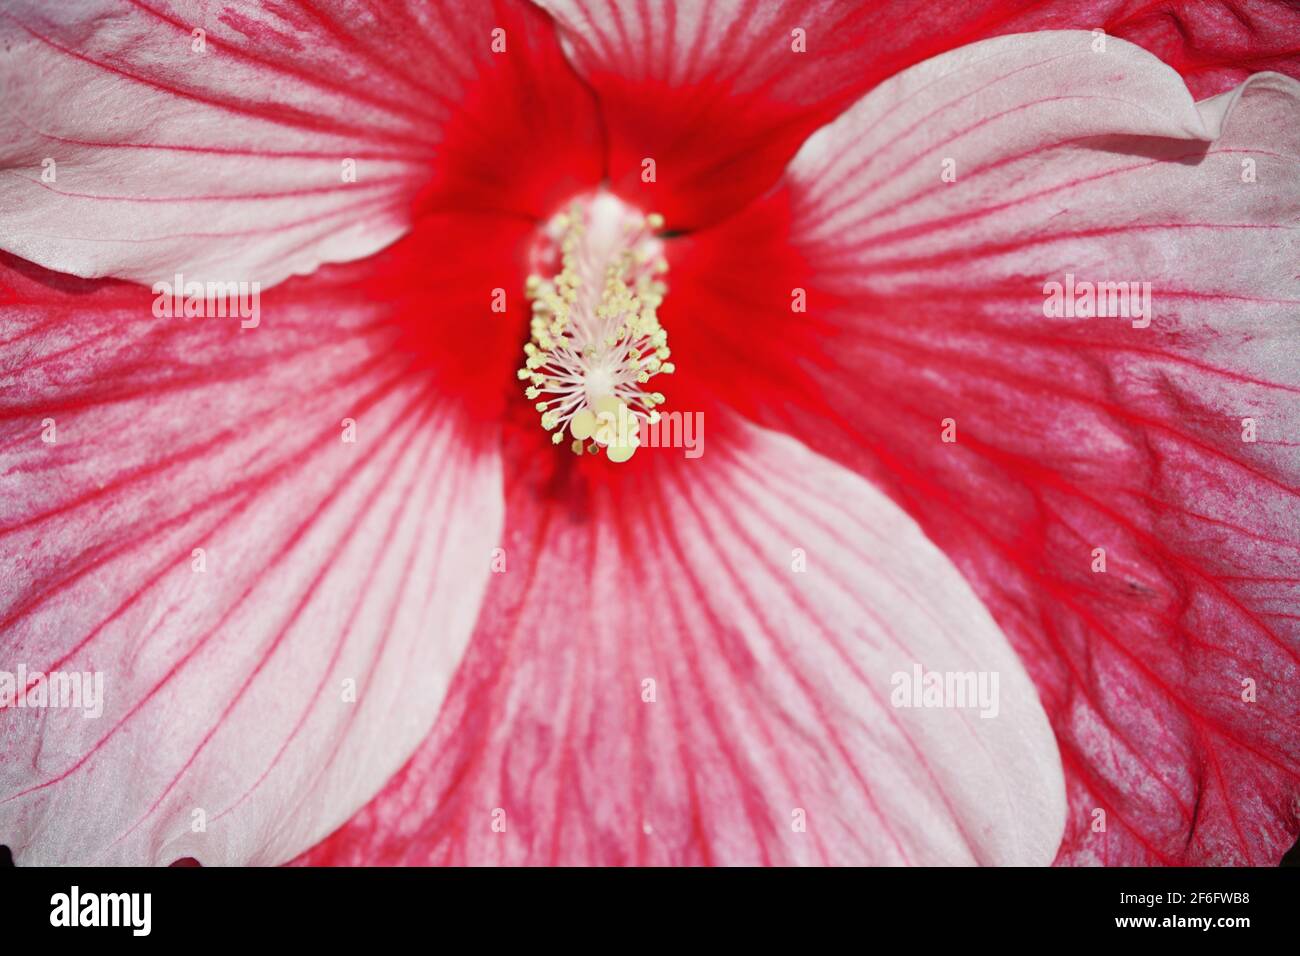 close up flower petal Stock Photo